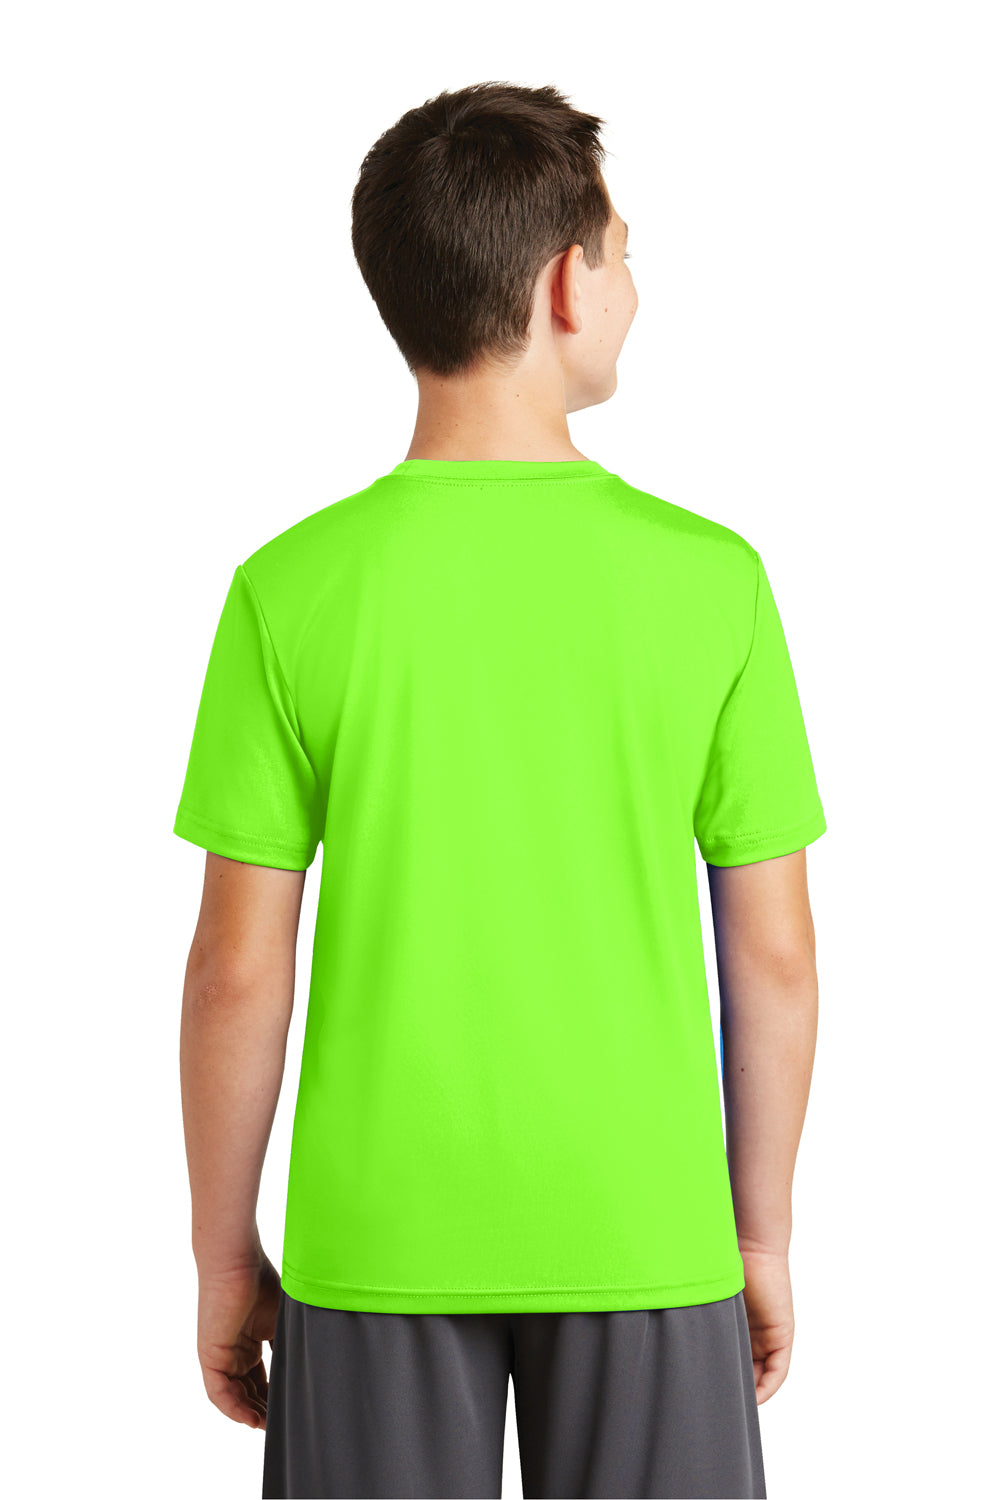 Sport-Tek YST320 Youth Tough Moisture Wicking Short Sleeve Crewneck T-Shirt Neon Green Back